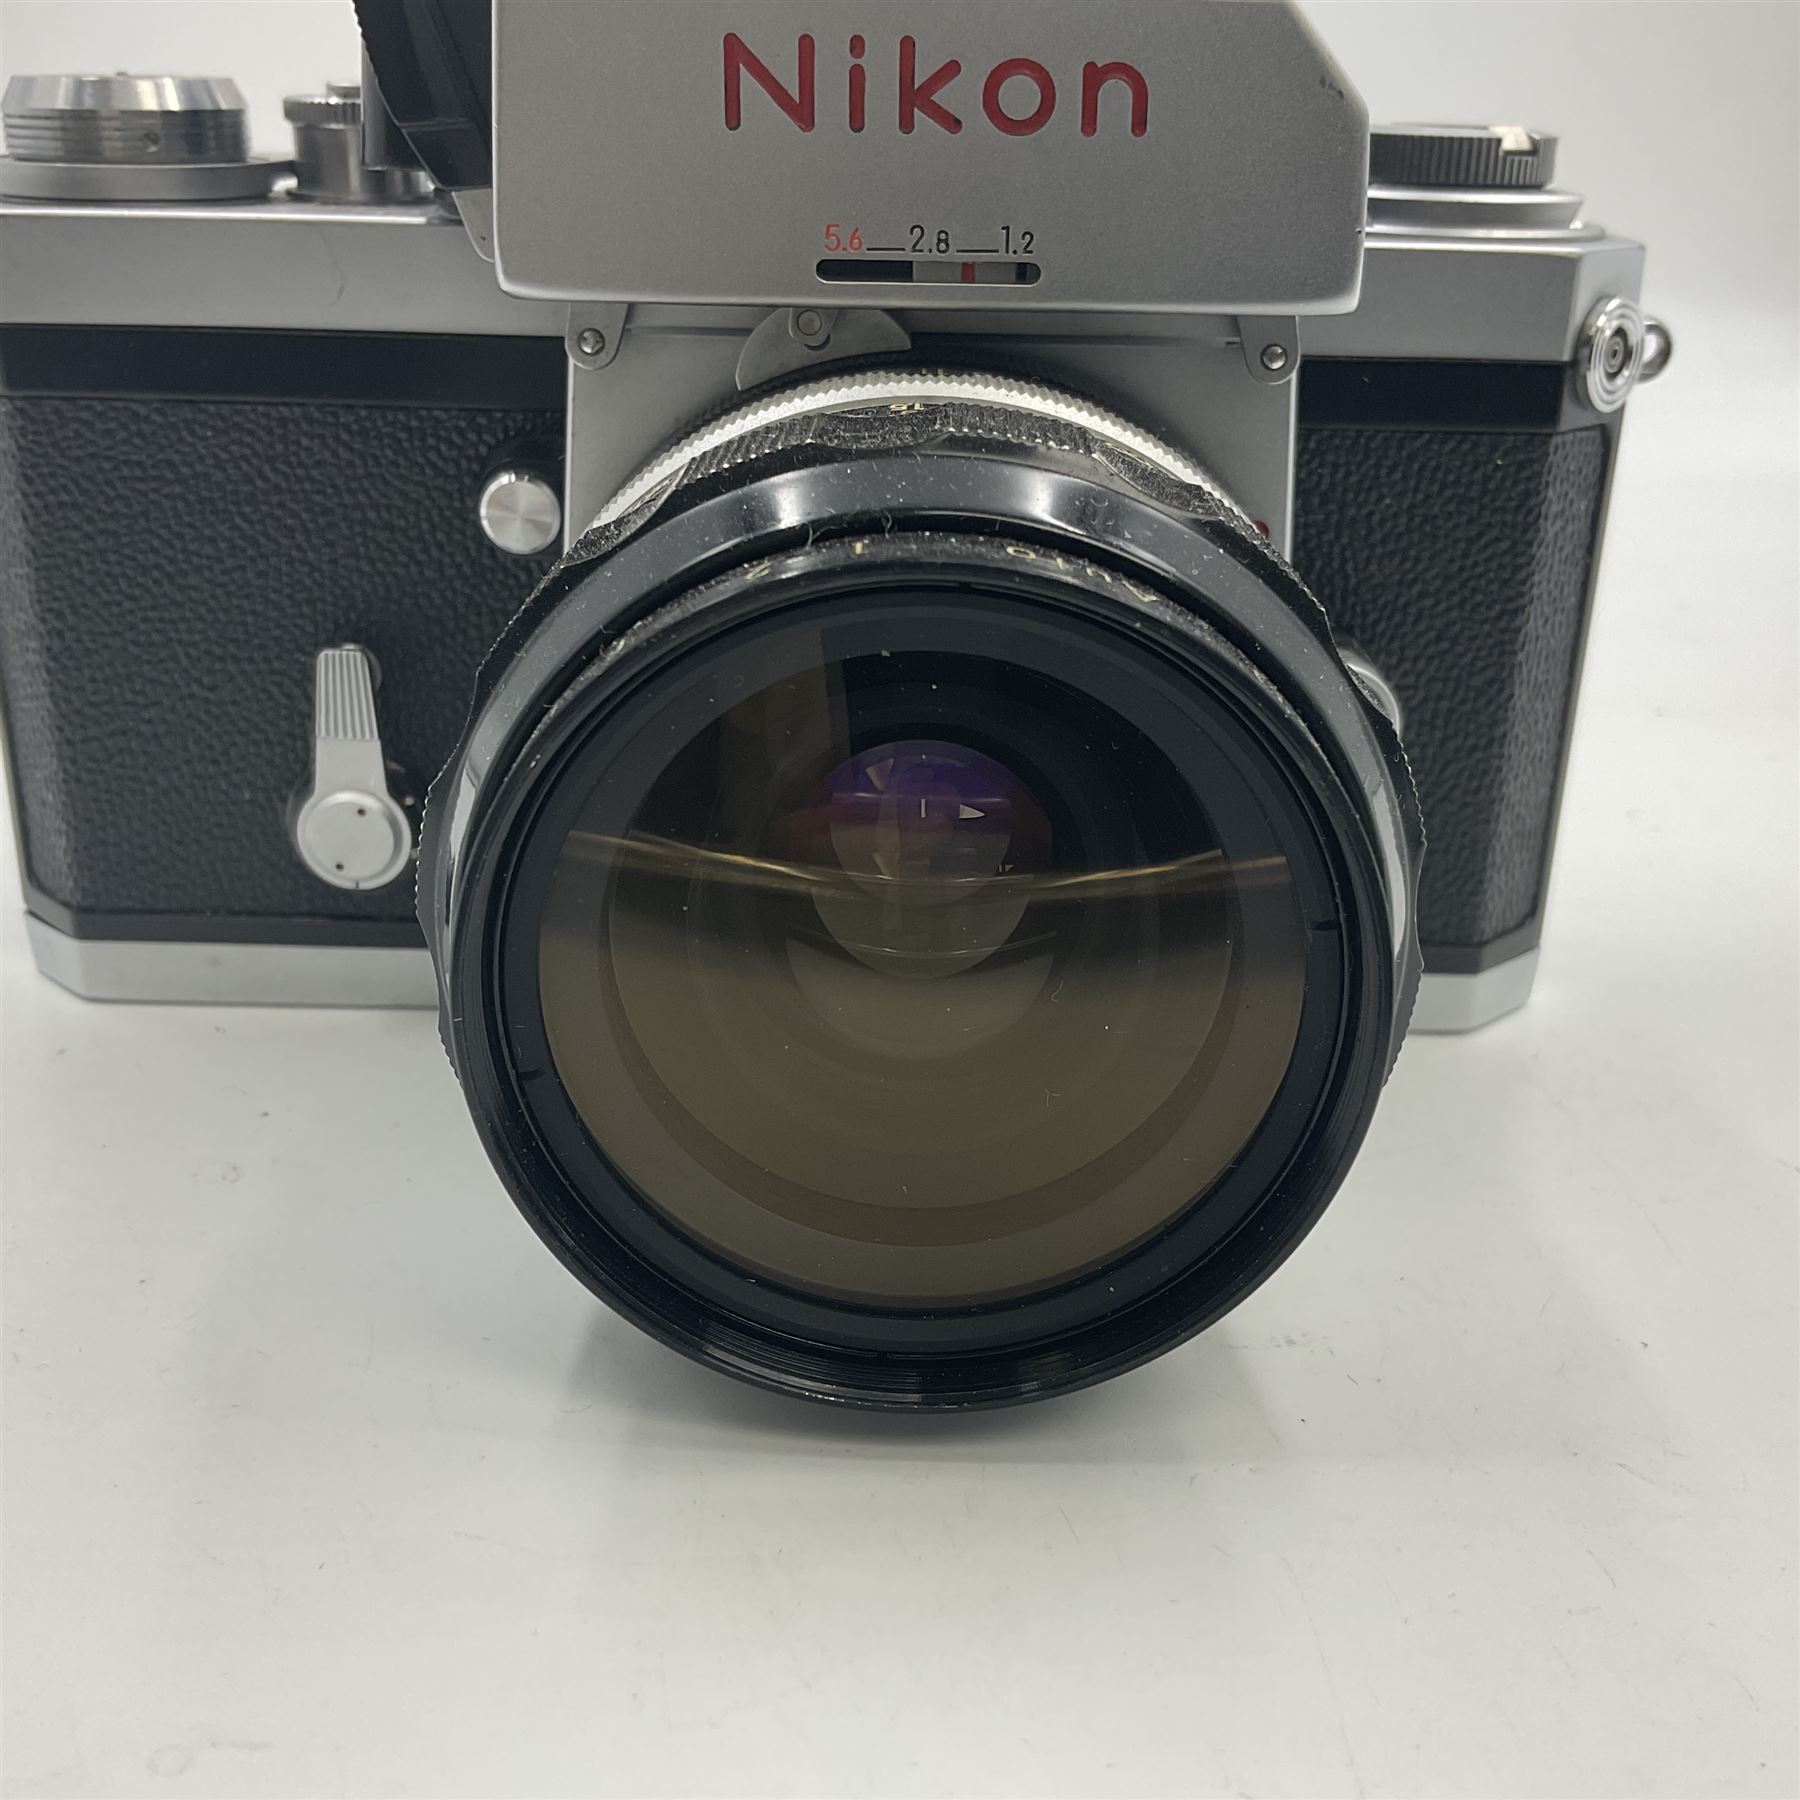 Nikon photomic Ftn camera body - Image 2 of 12